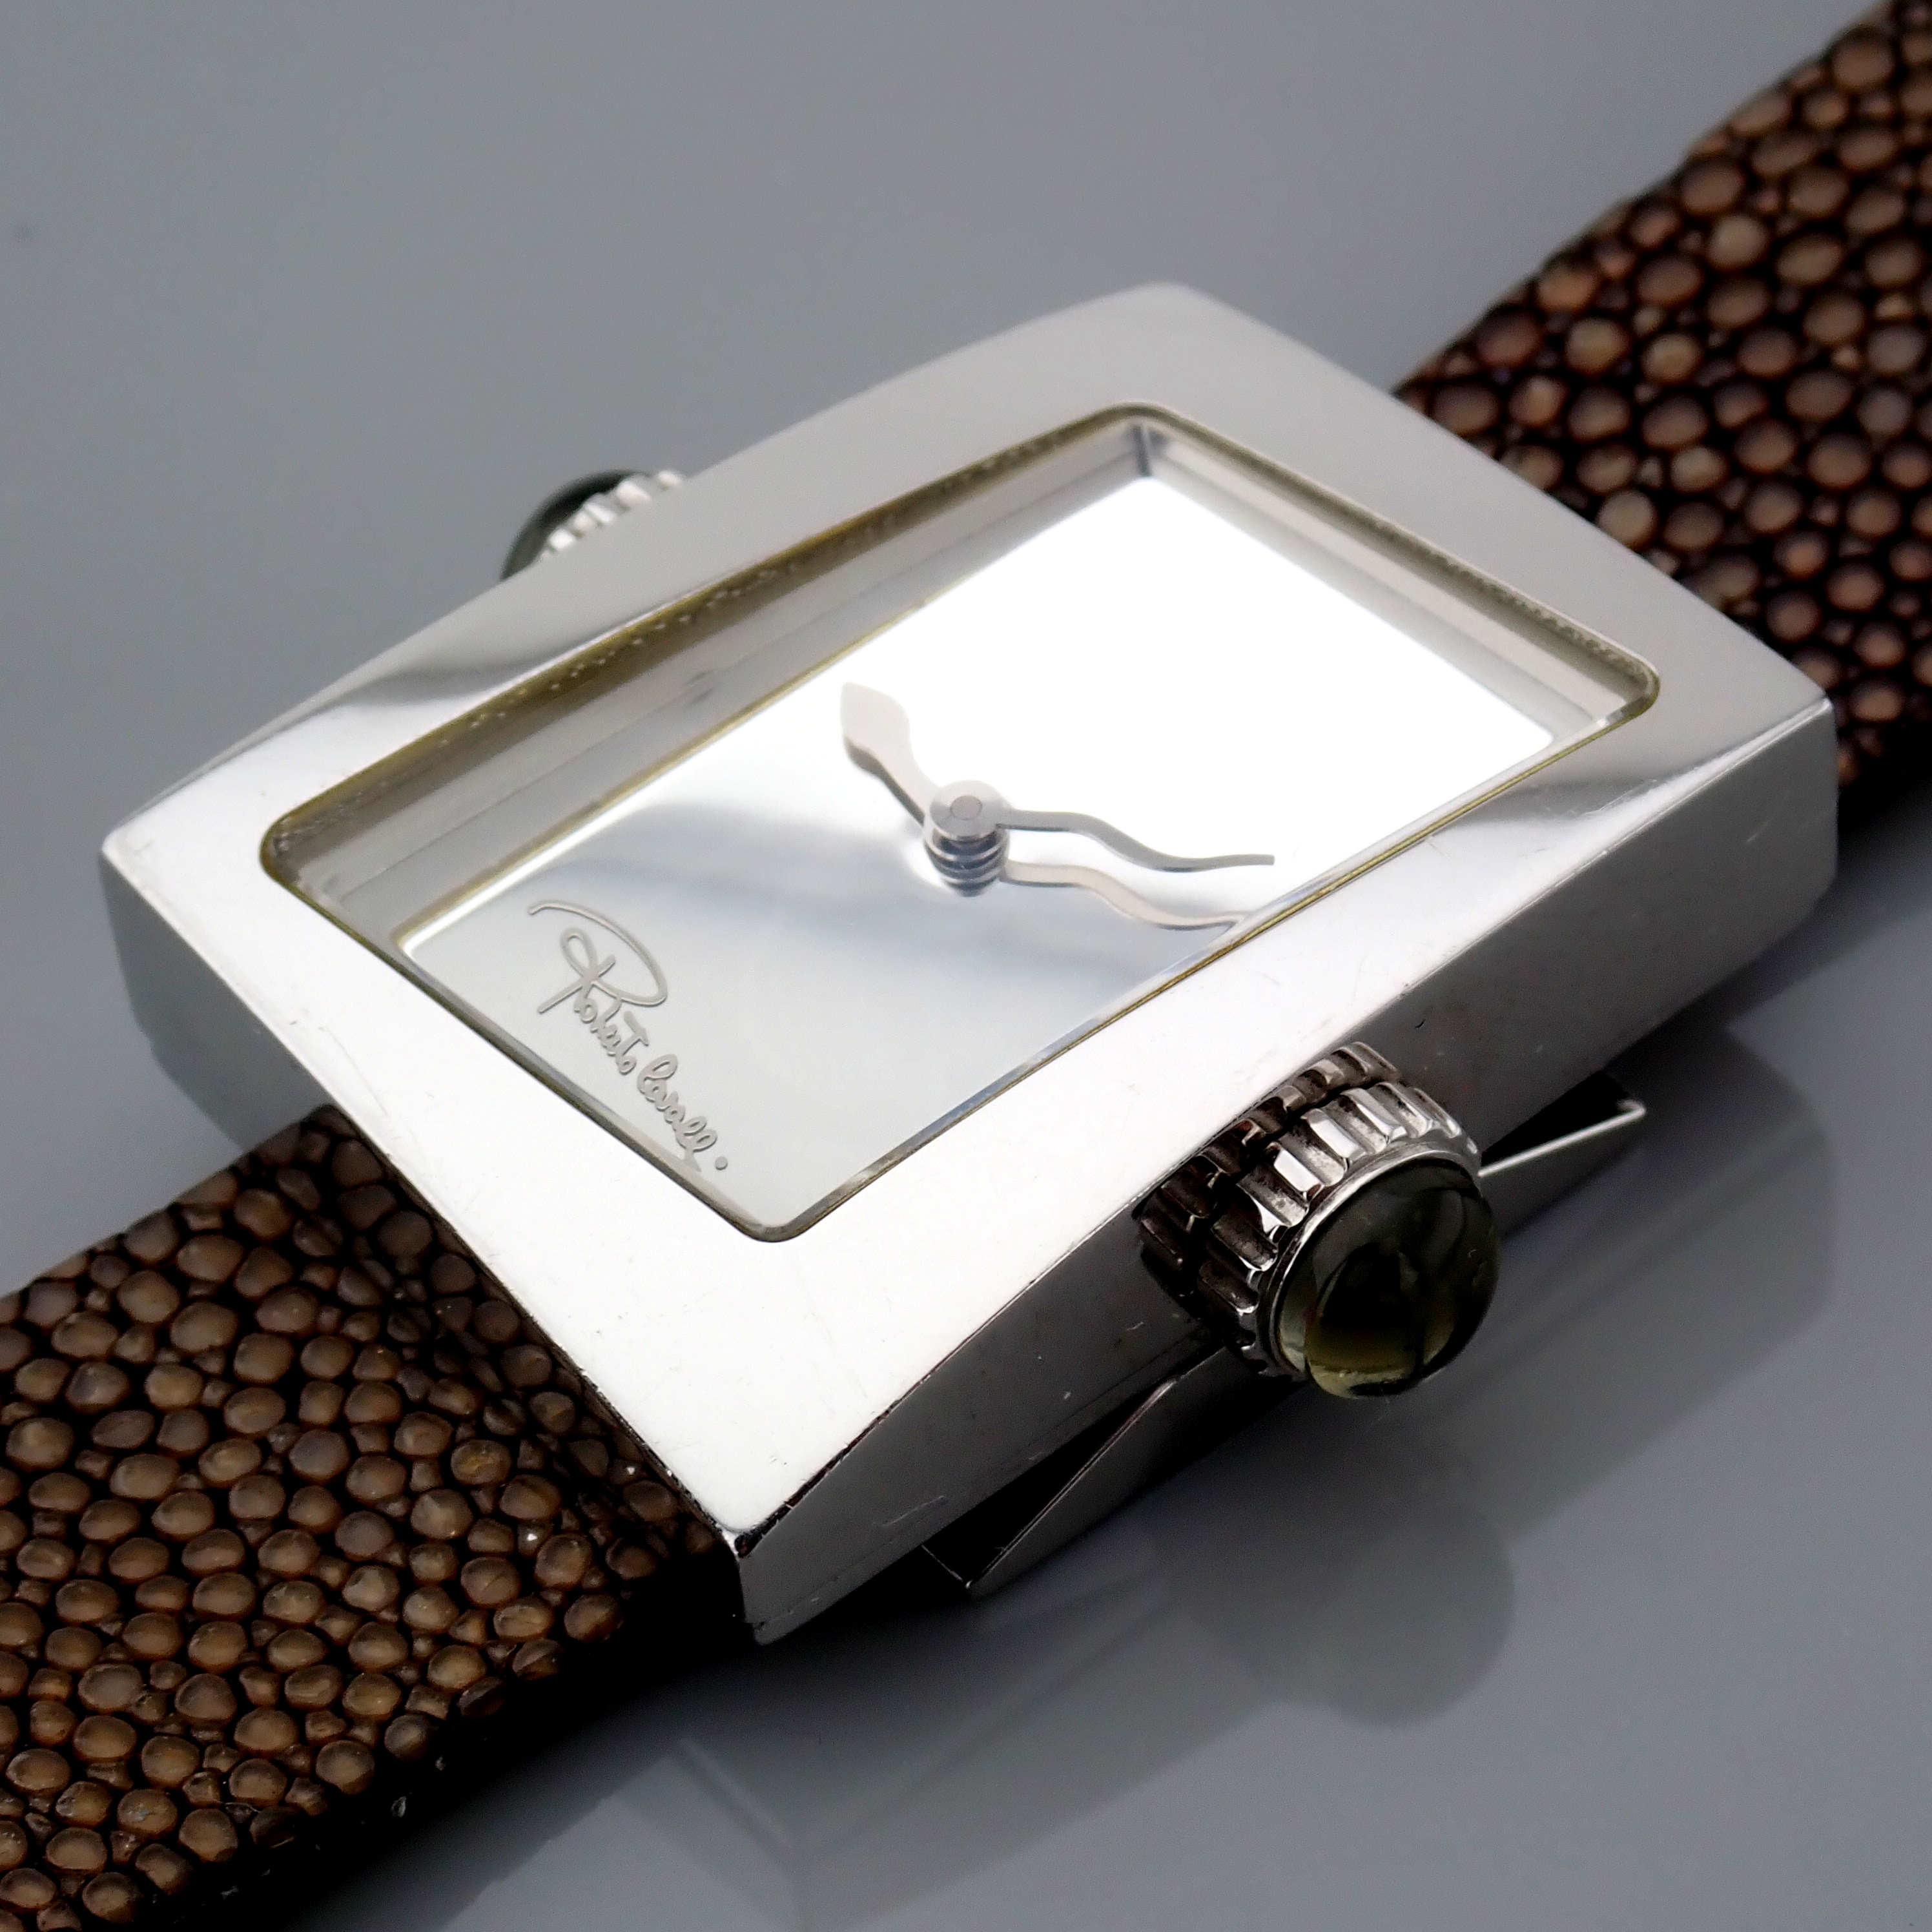 Roberto Cavalli - Lady's Steel Wrist Watch - Image 7 of 12